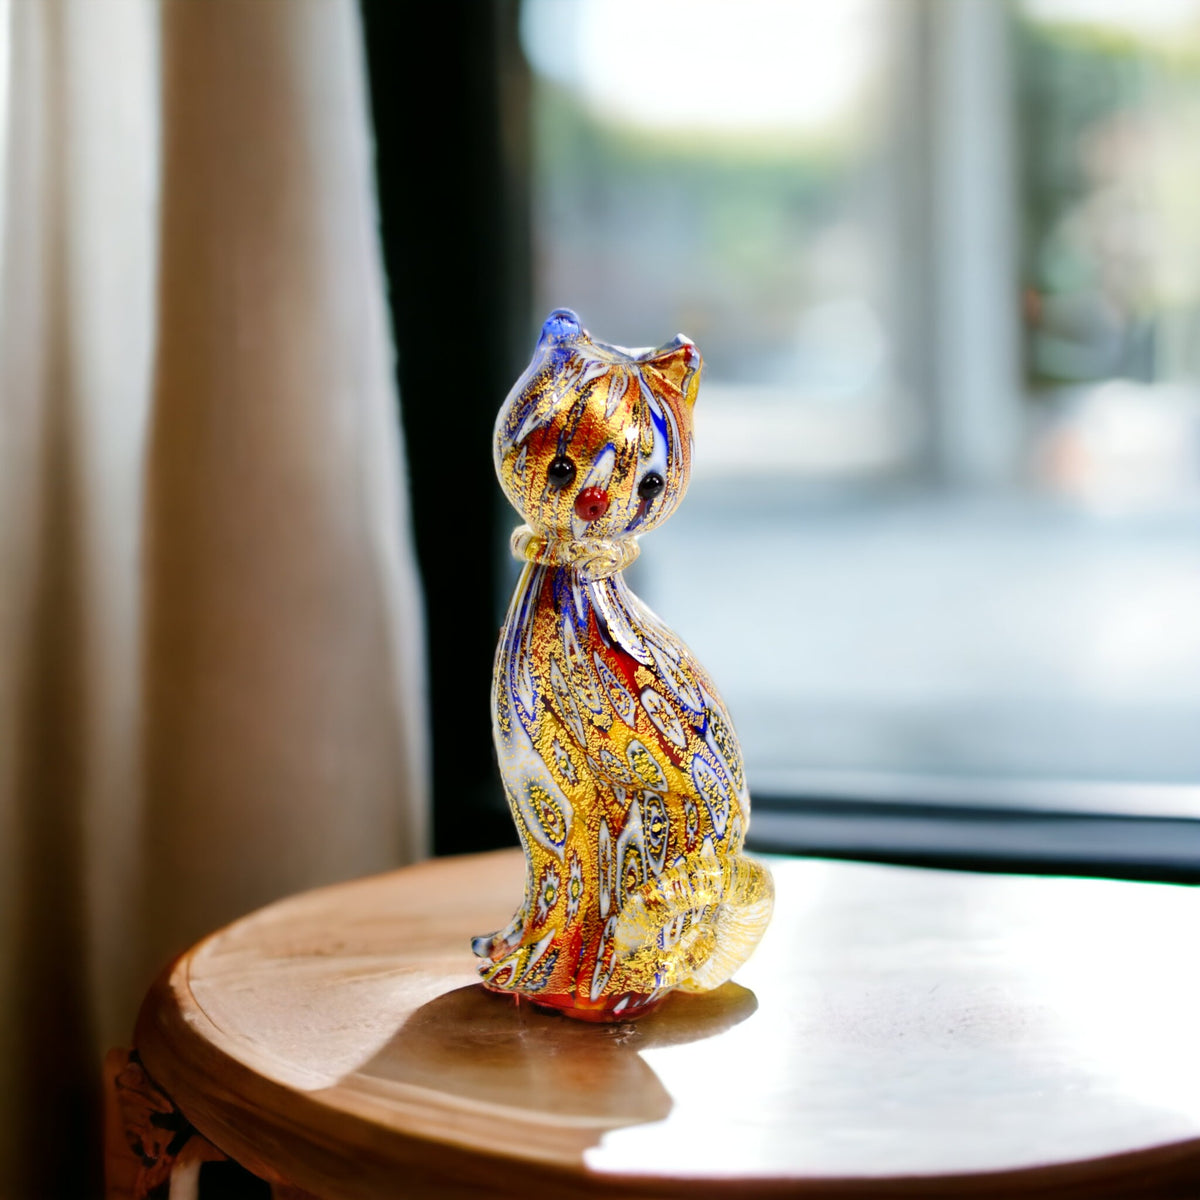 Murano Glass Kitty Cat Figurine, Millefiori, solid glass lampwork, Made in Italy - My Italian Decor